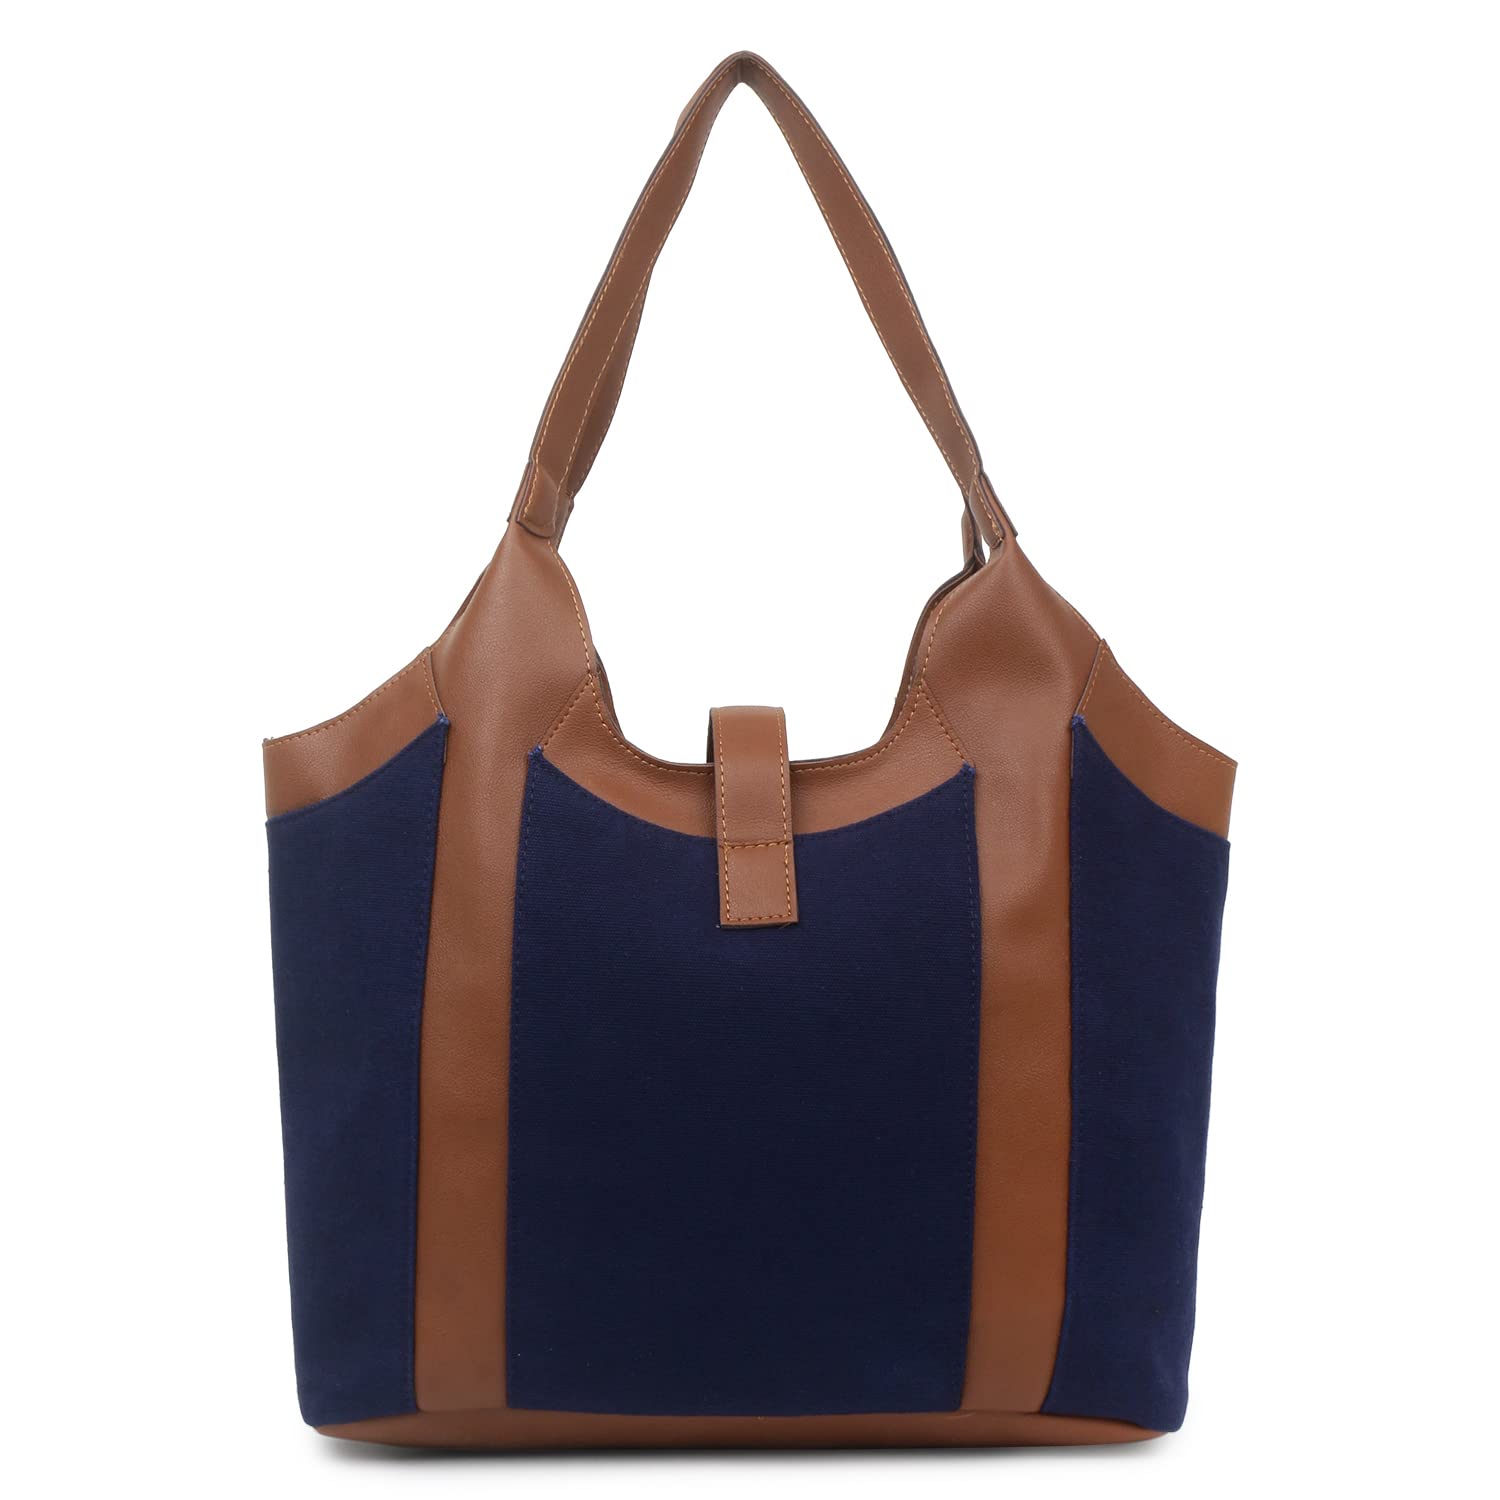 Handbags for women and girls | Ladies purse handbag - Women - 1759857600